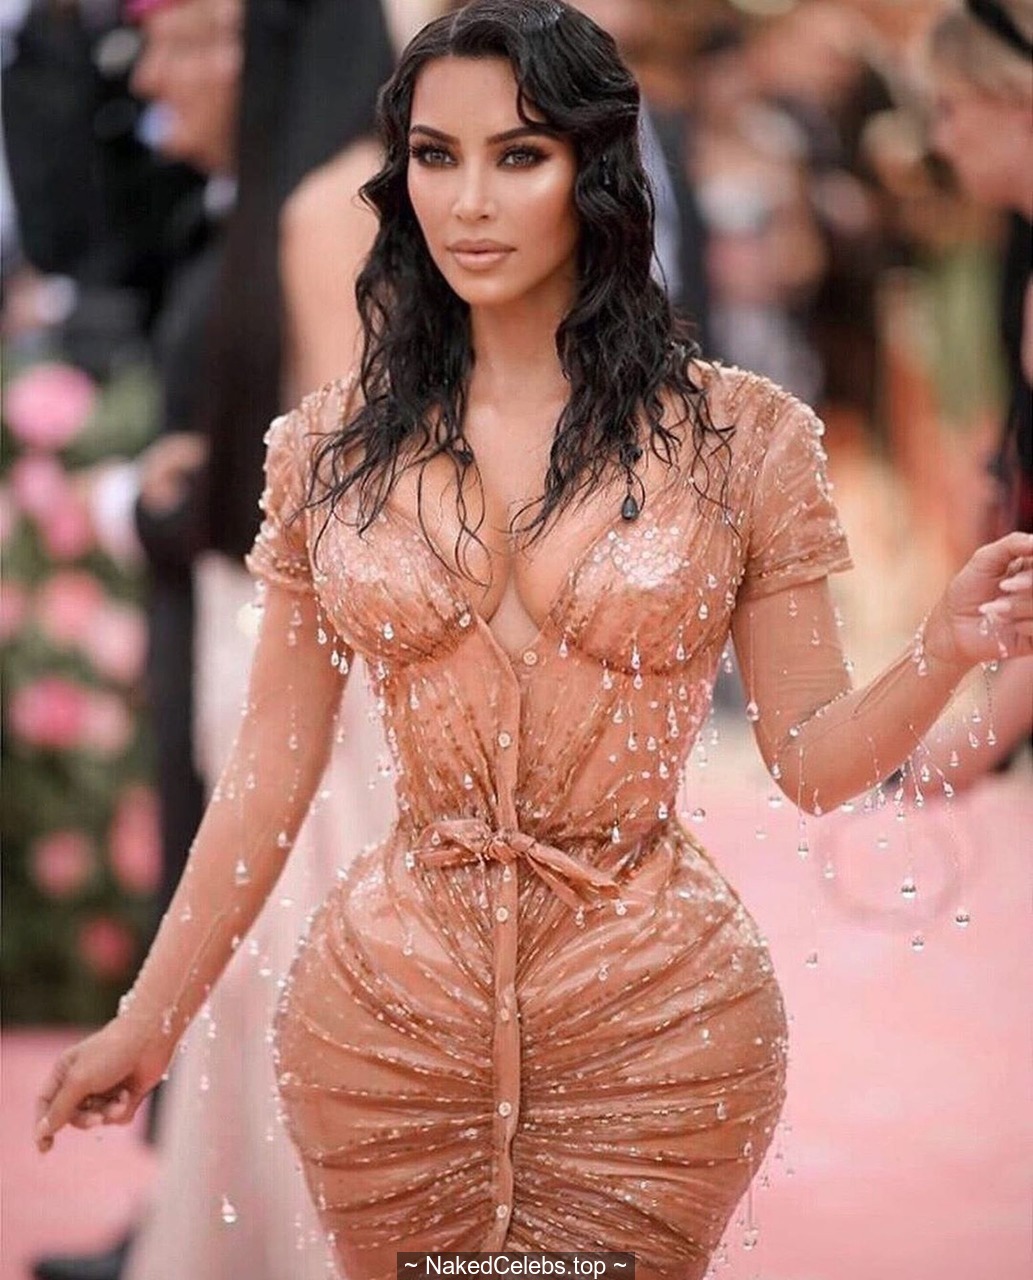 kim-kardashian-deep-cleavage-at-2019-met-gala-in-new-york-city-3.jpg